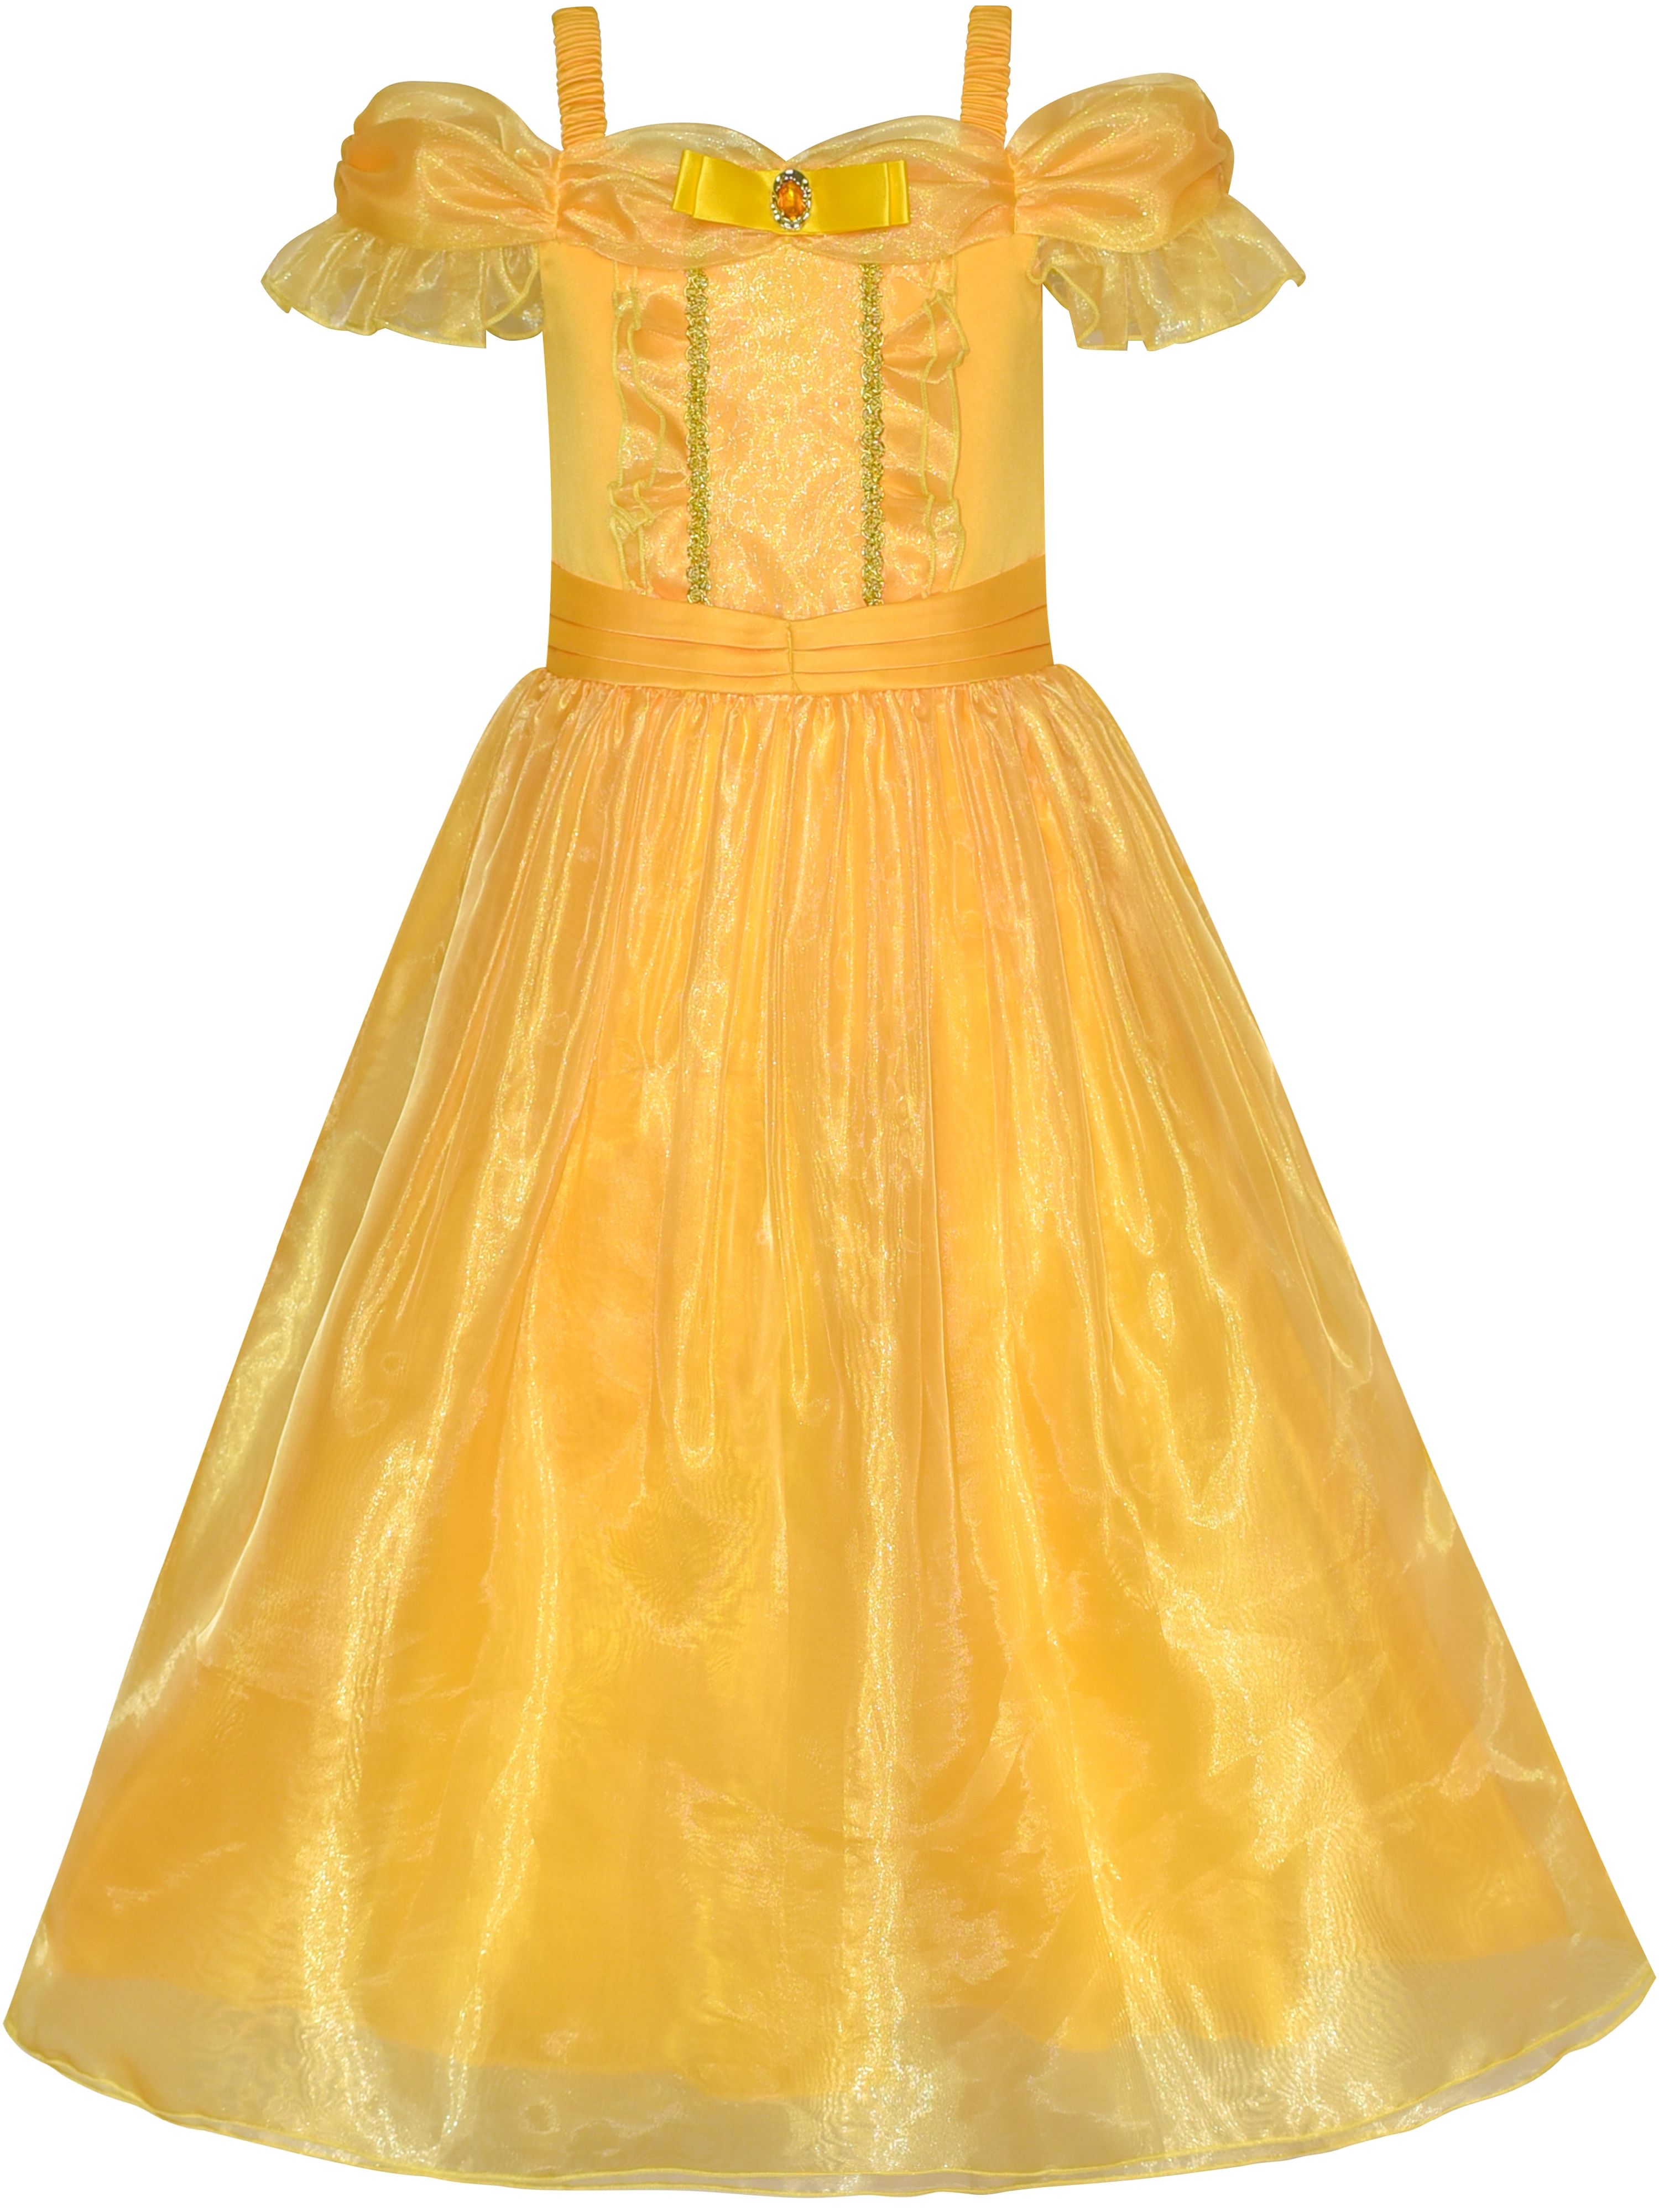 Kid dress up-Princess costume-Knight Costume-Super Hero costume Crown,Magic Wand and Tunic PRINCESS-KNIGHT SET